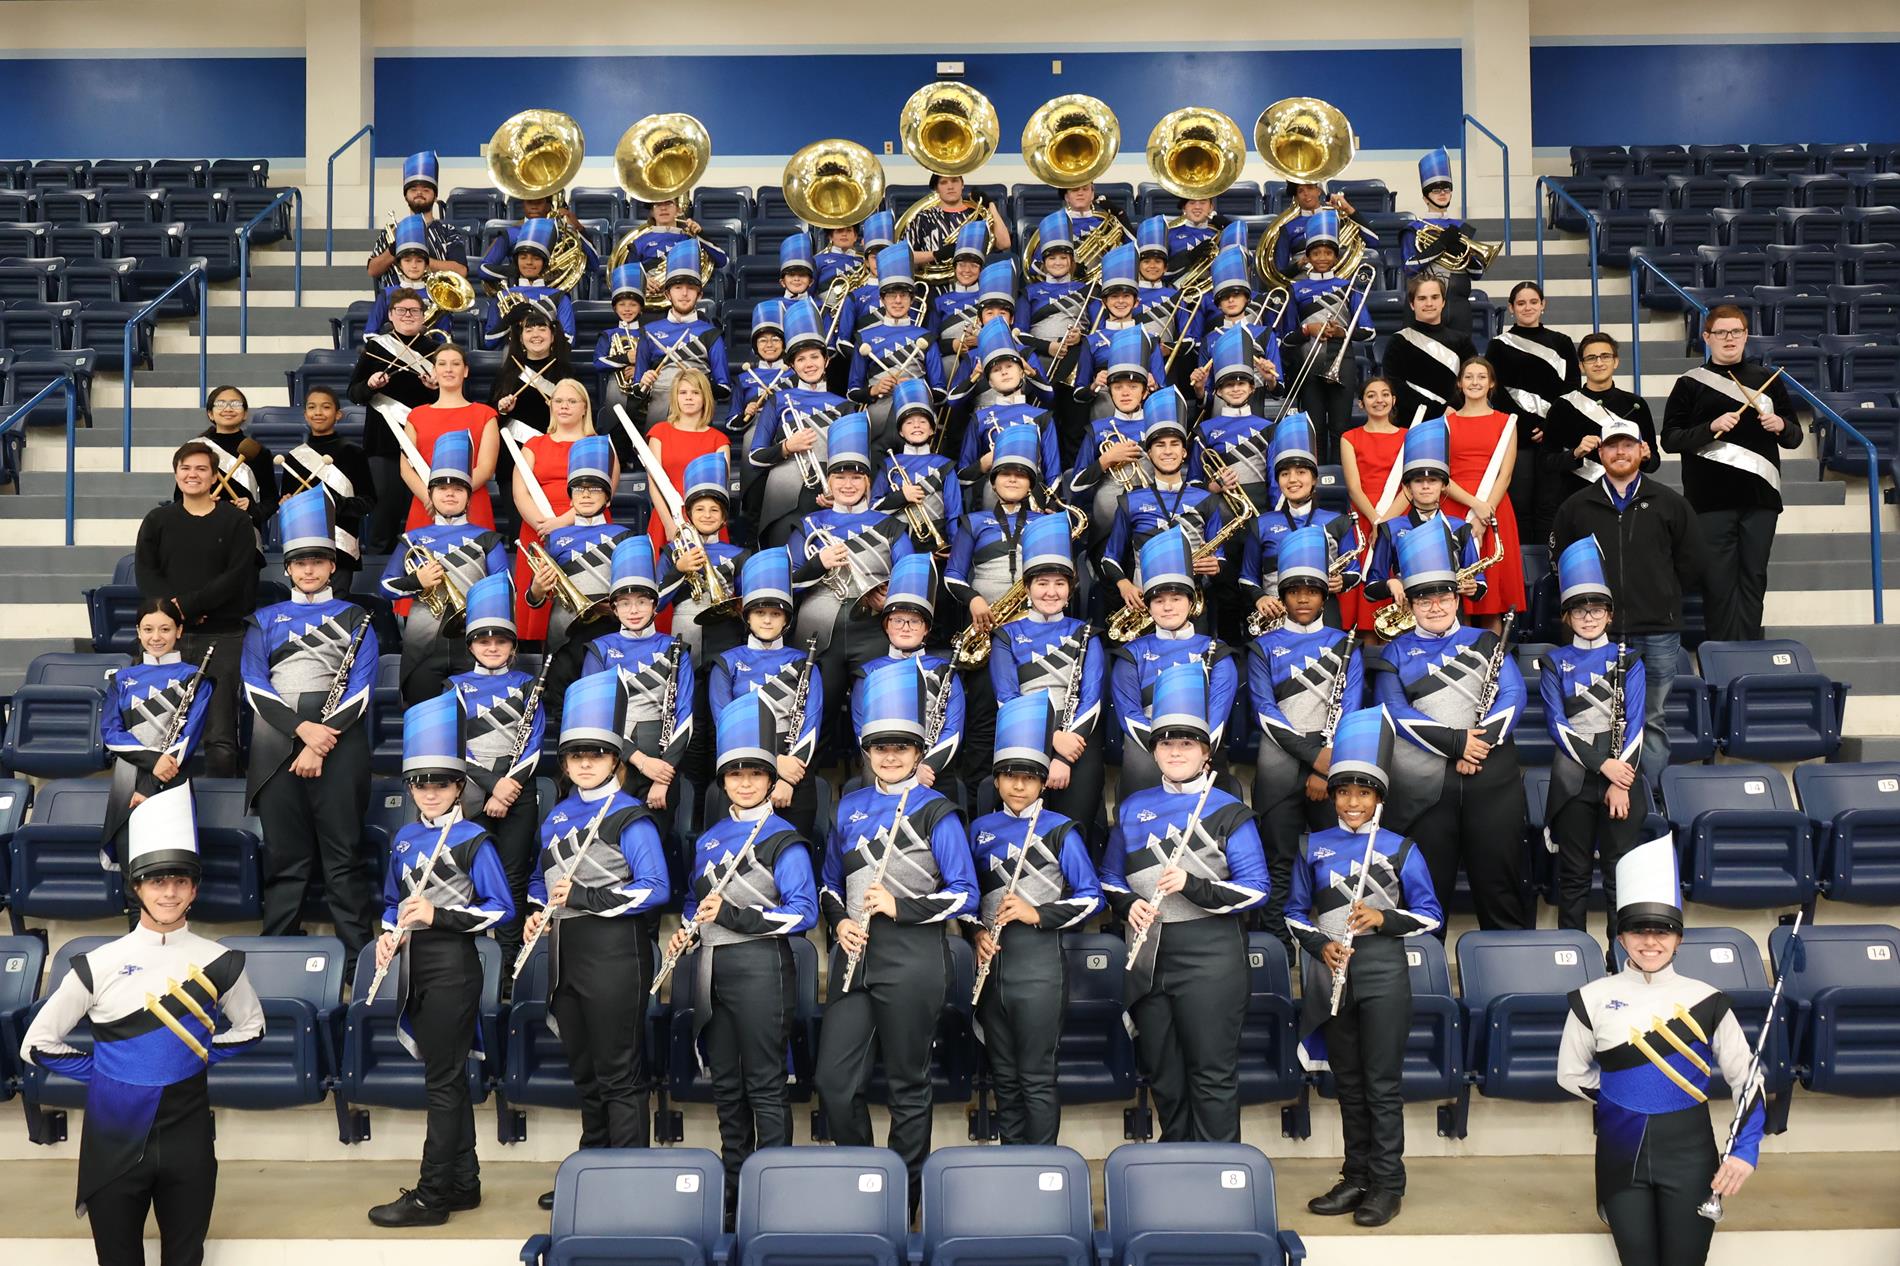 Full band in uniform